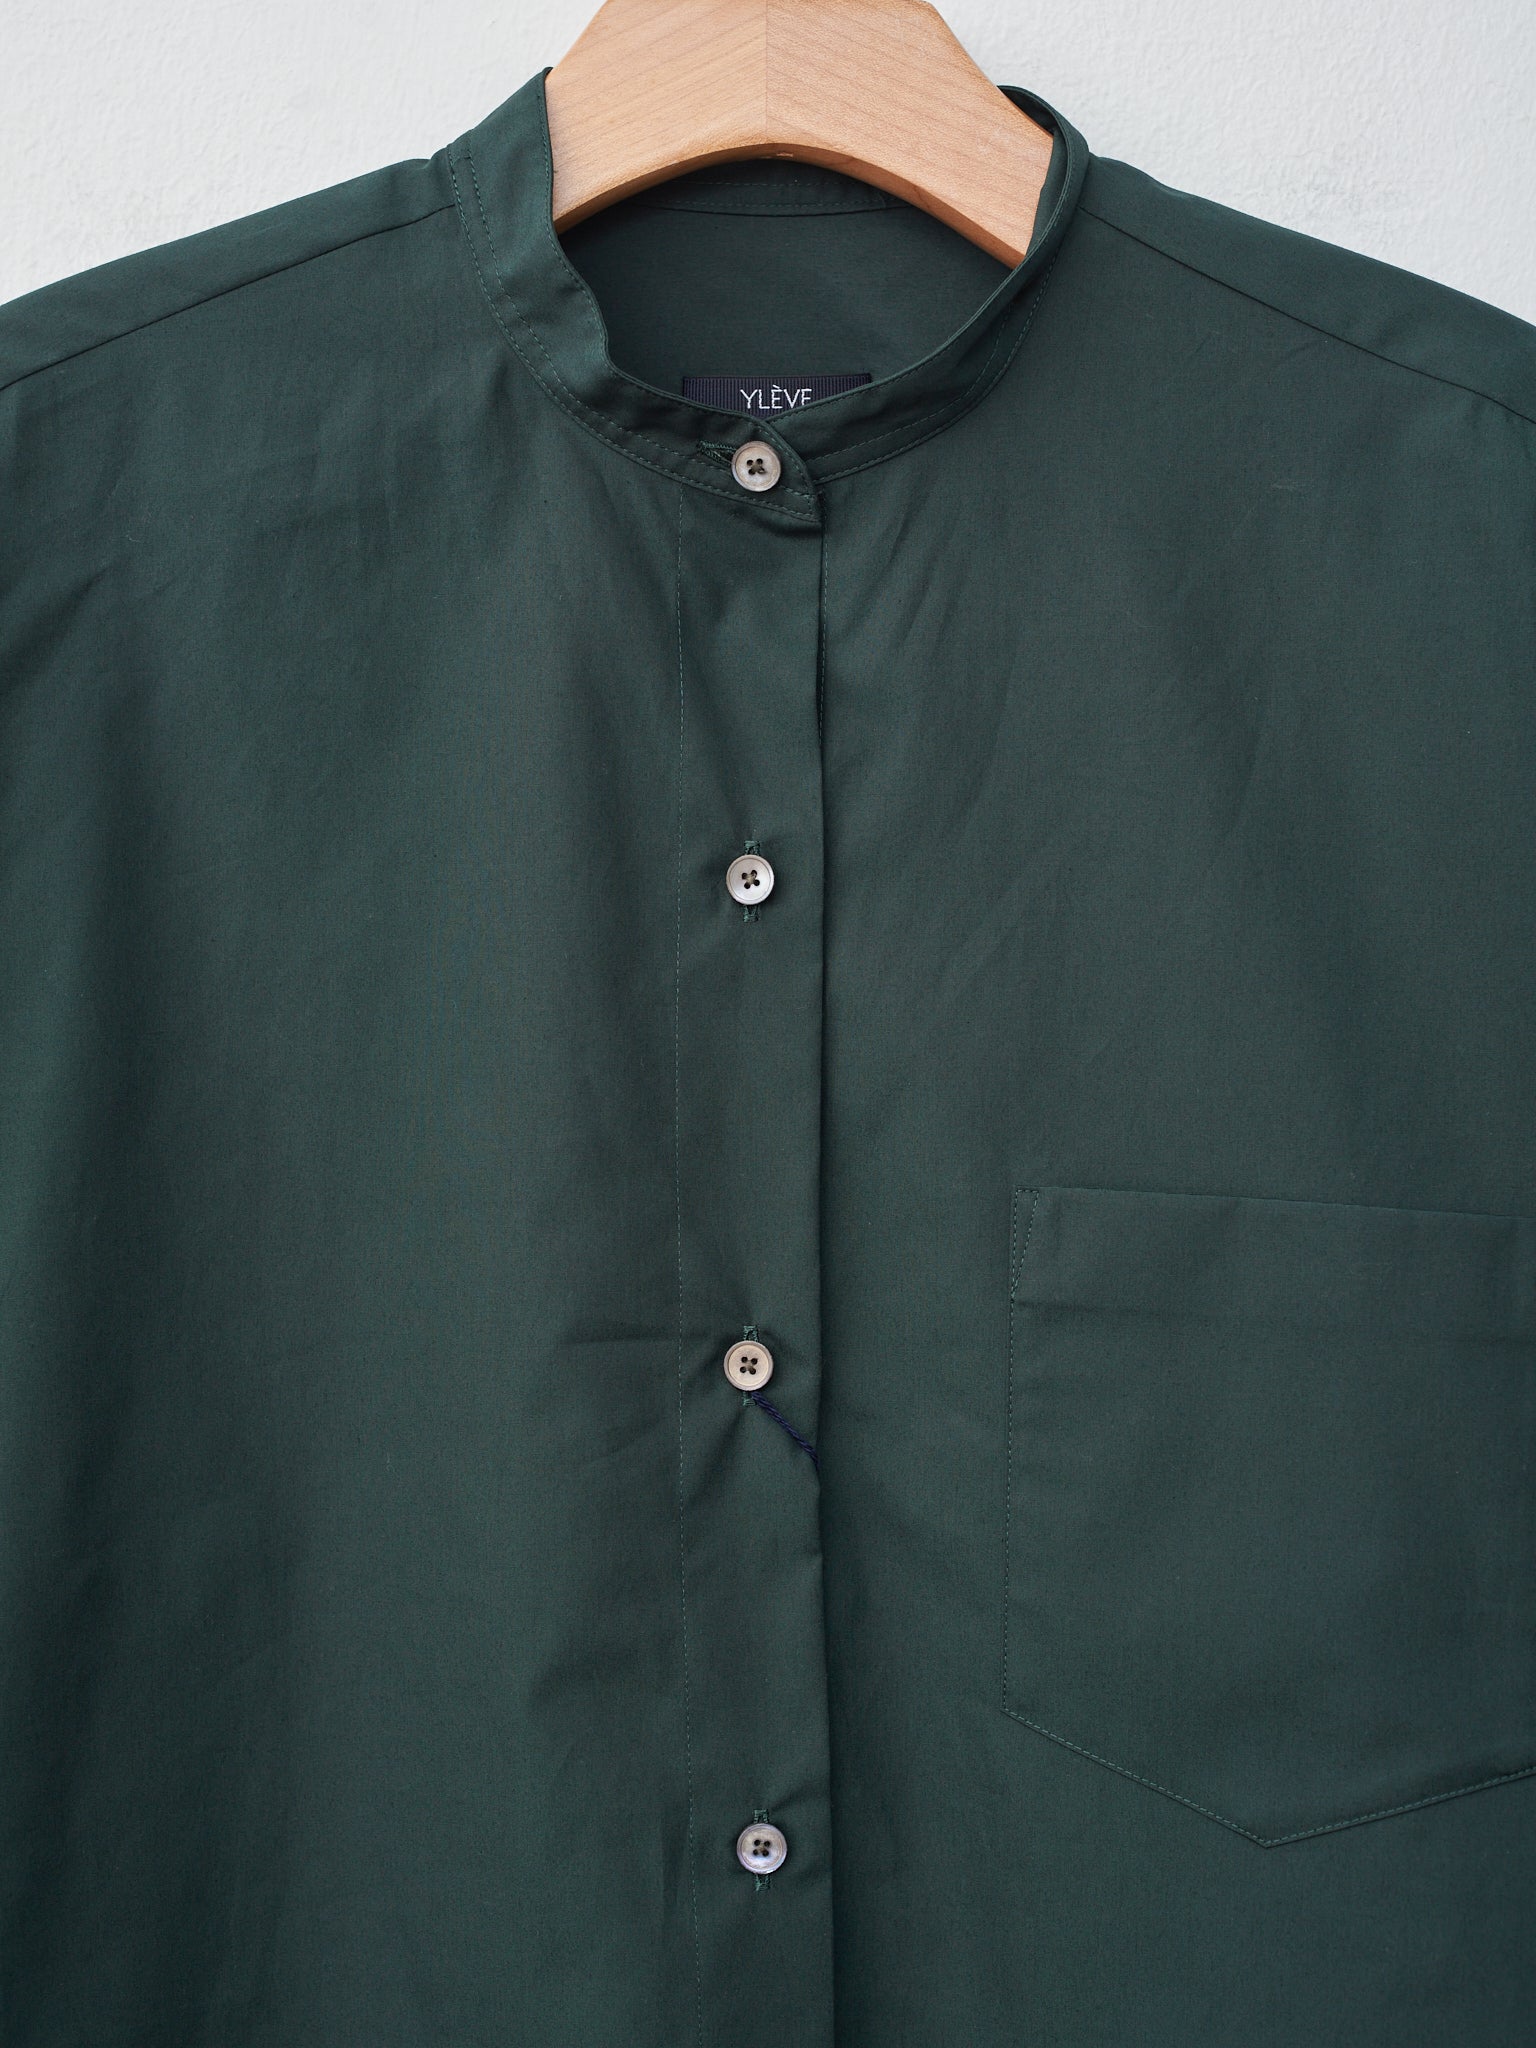 Namu Shop - Yleve Finx Cotton Weather S/S Shirt - Dark Green